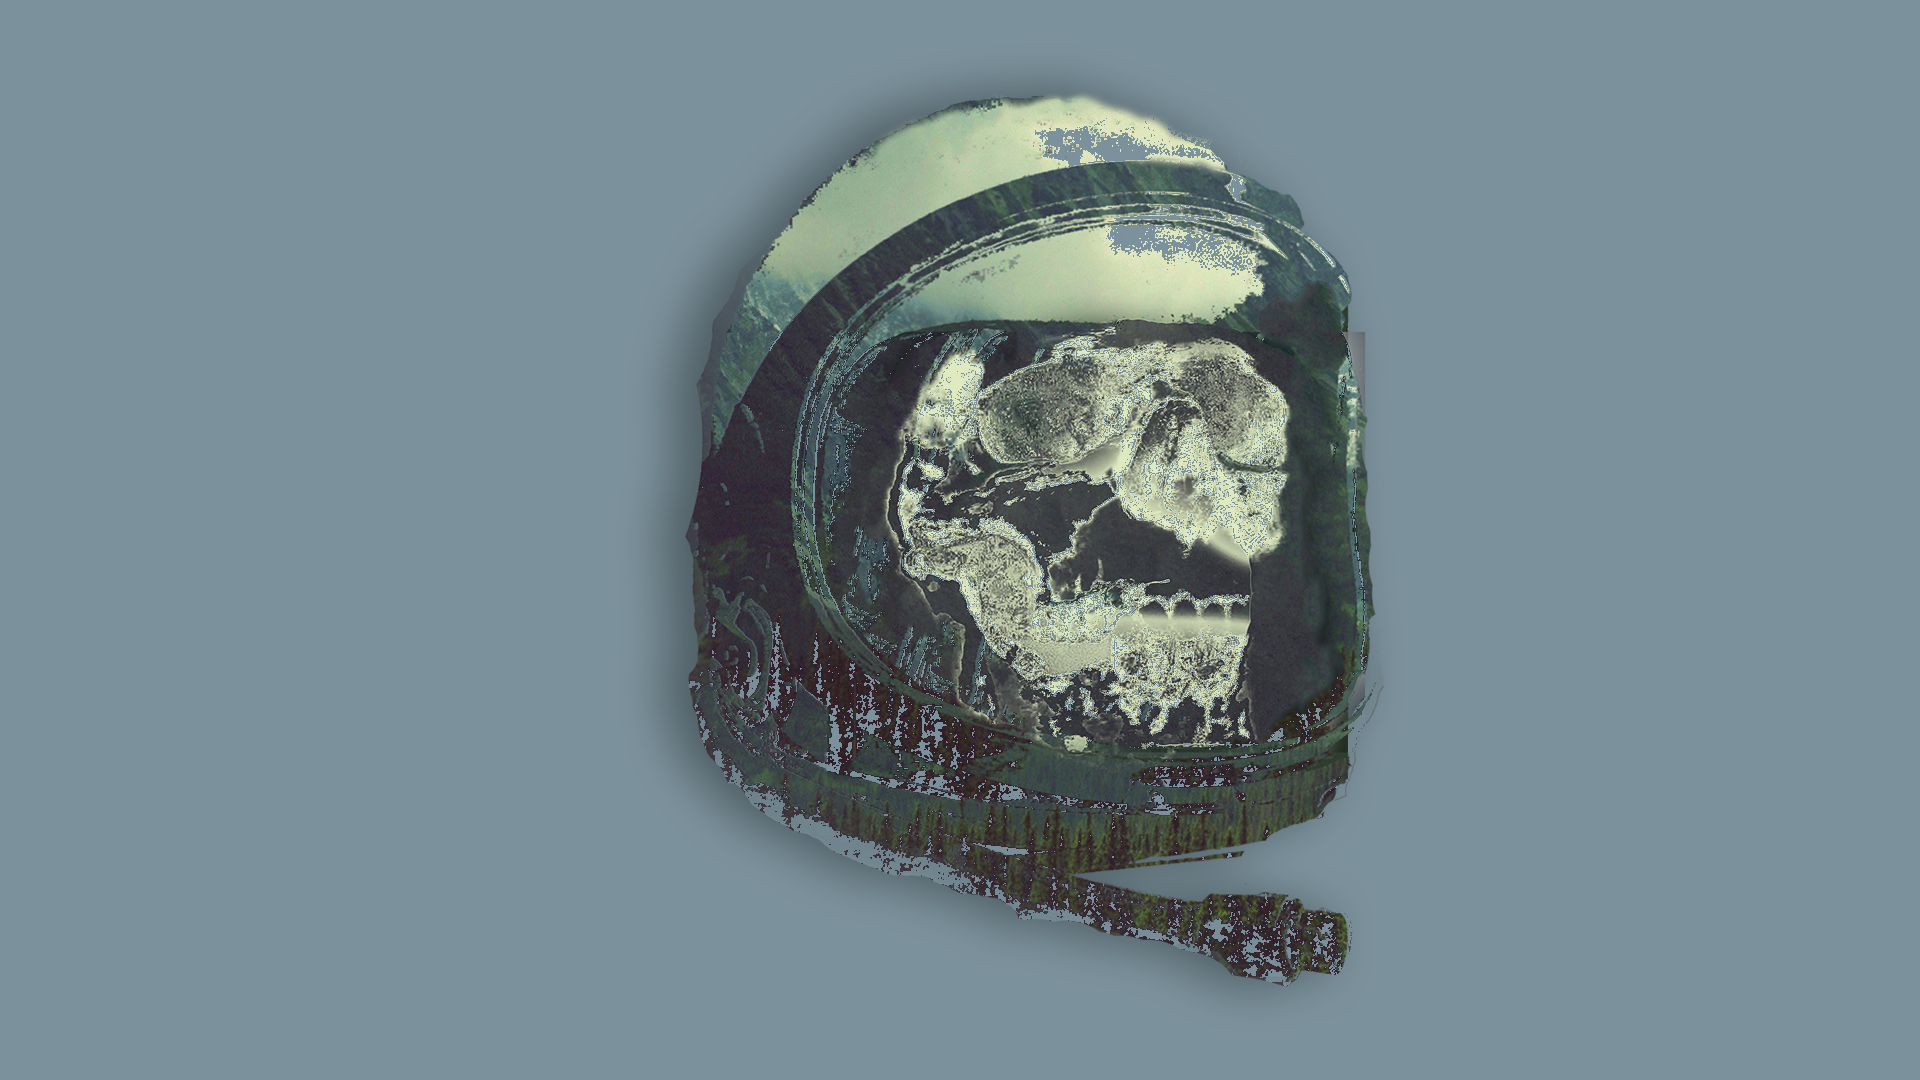 General 1920x1080 skull minimalism helmet blue background simple background digital art